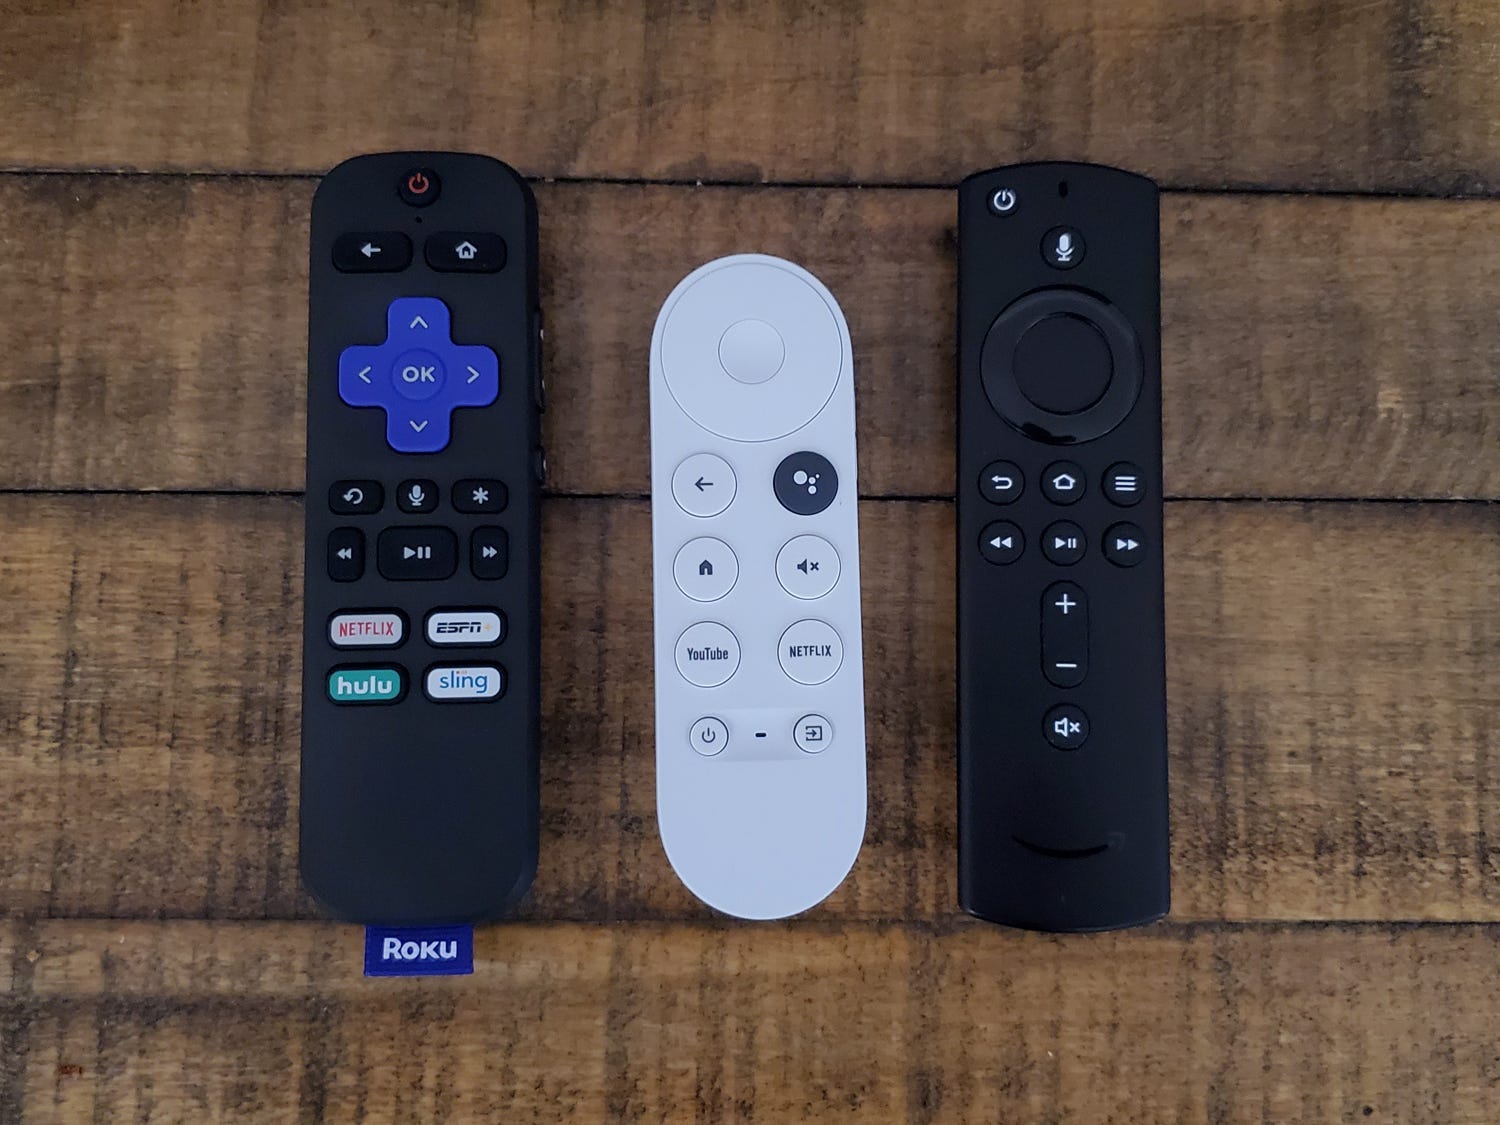 Chromecast remote comparison